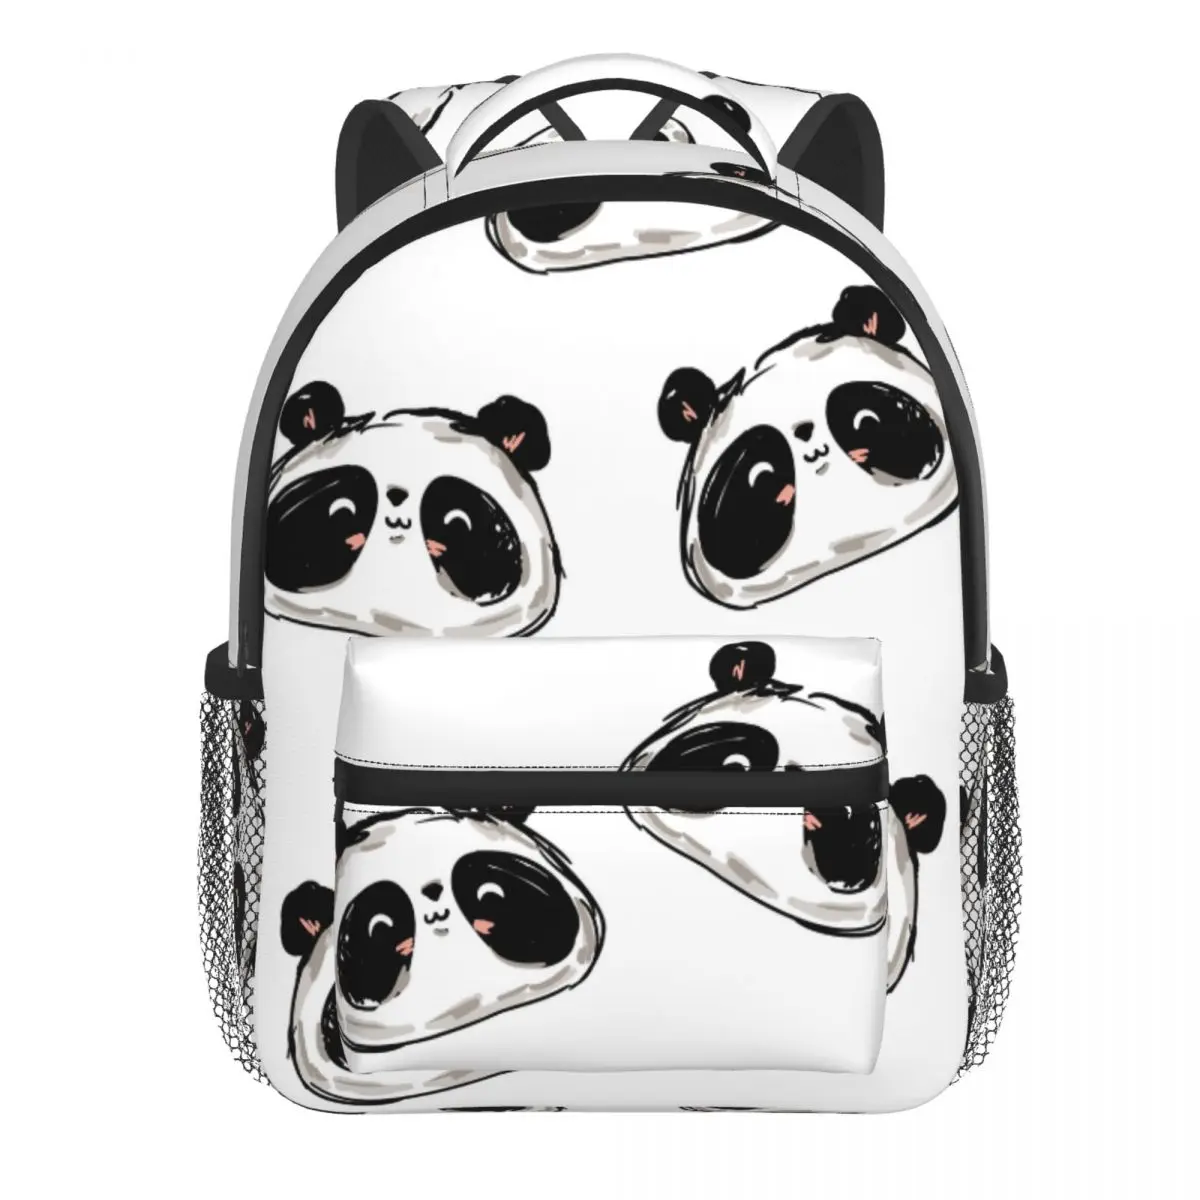 Cute Panda Pattern (1) Baby Backpack Kindergarten Schoolbag Kids Children School Bag